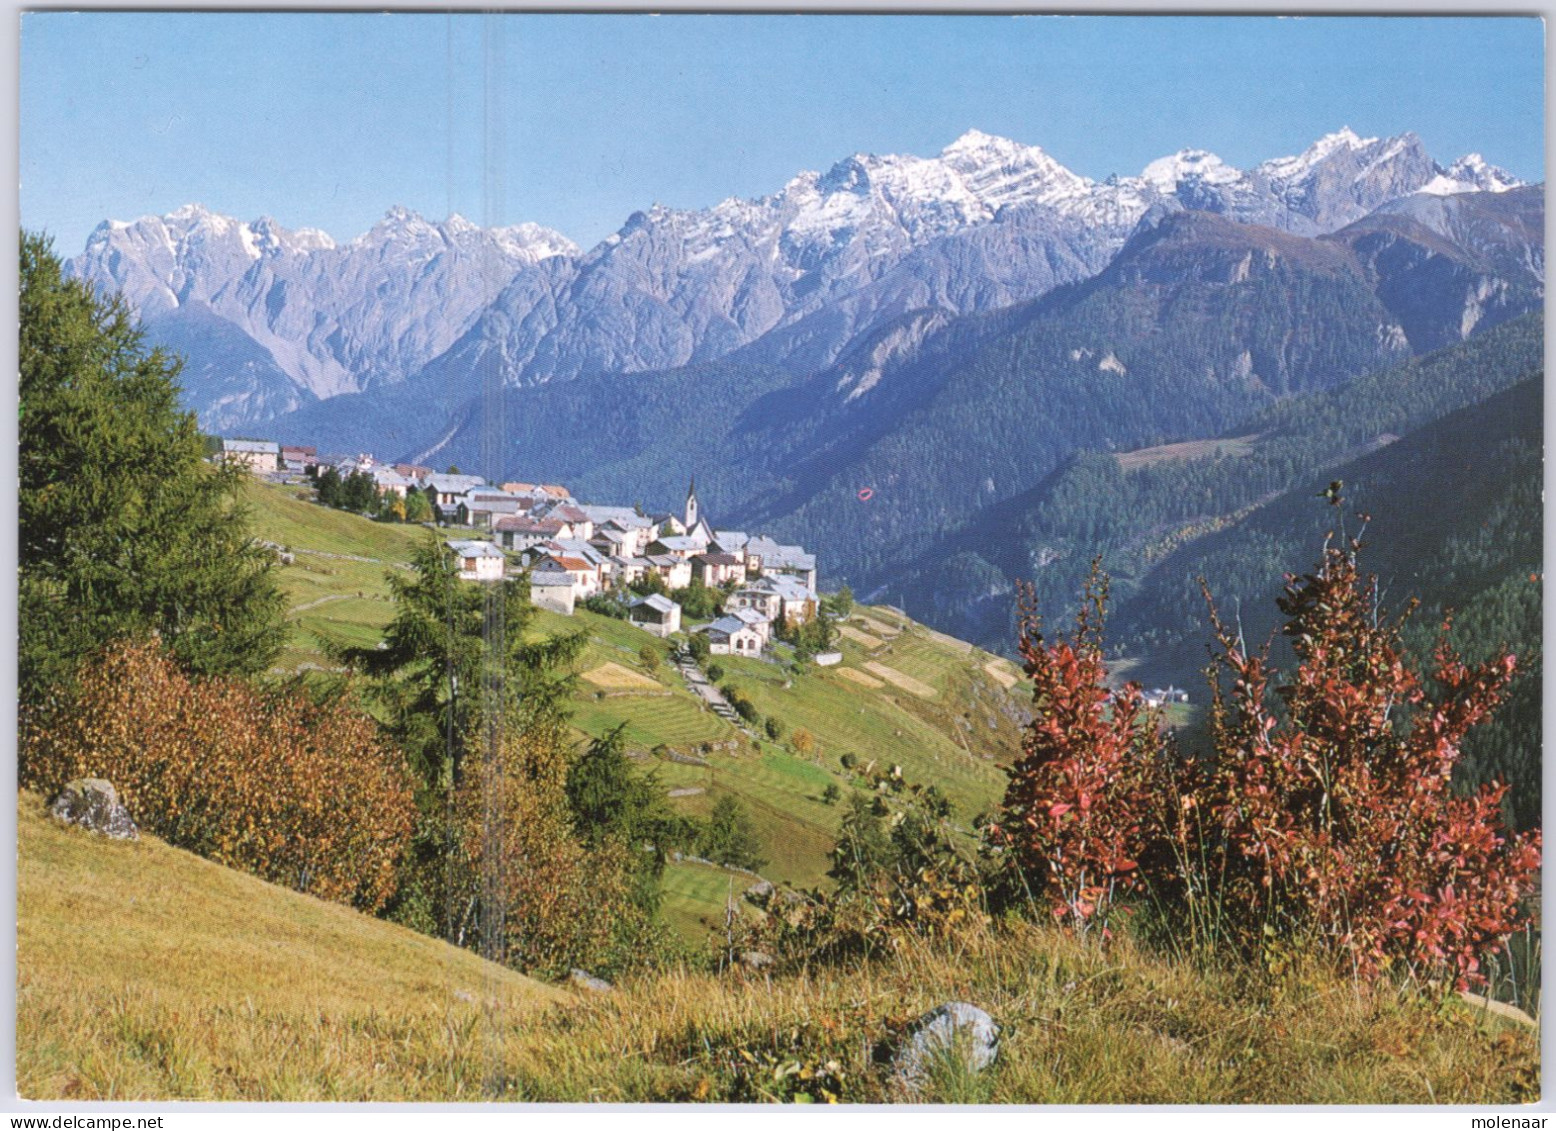 Postkaarten > Postkaarten > Europa > Zwitserland > GR Graubünden > Guarda Ongebruikt (16045) - Guarda